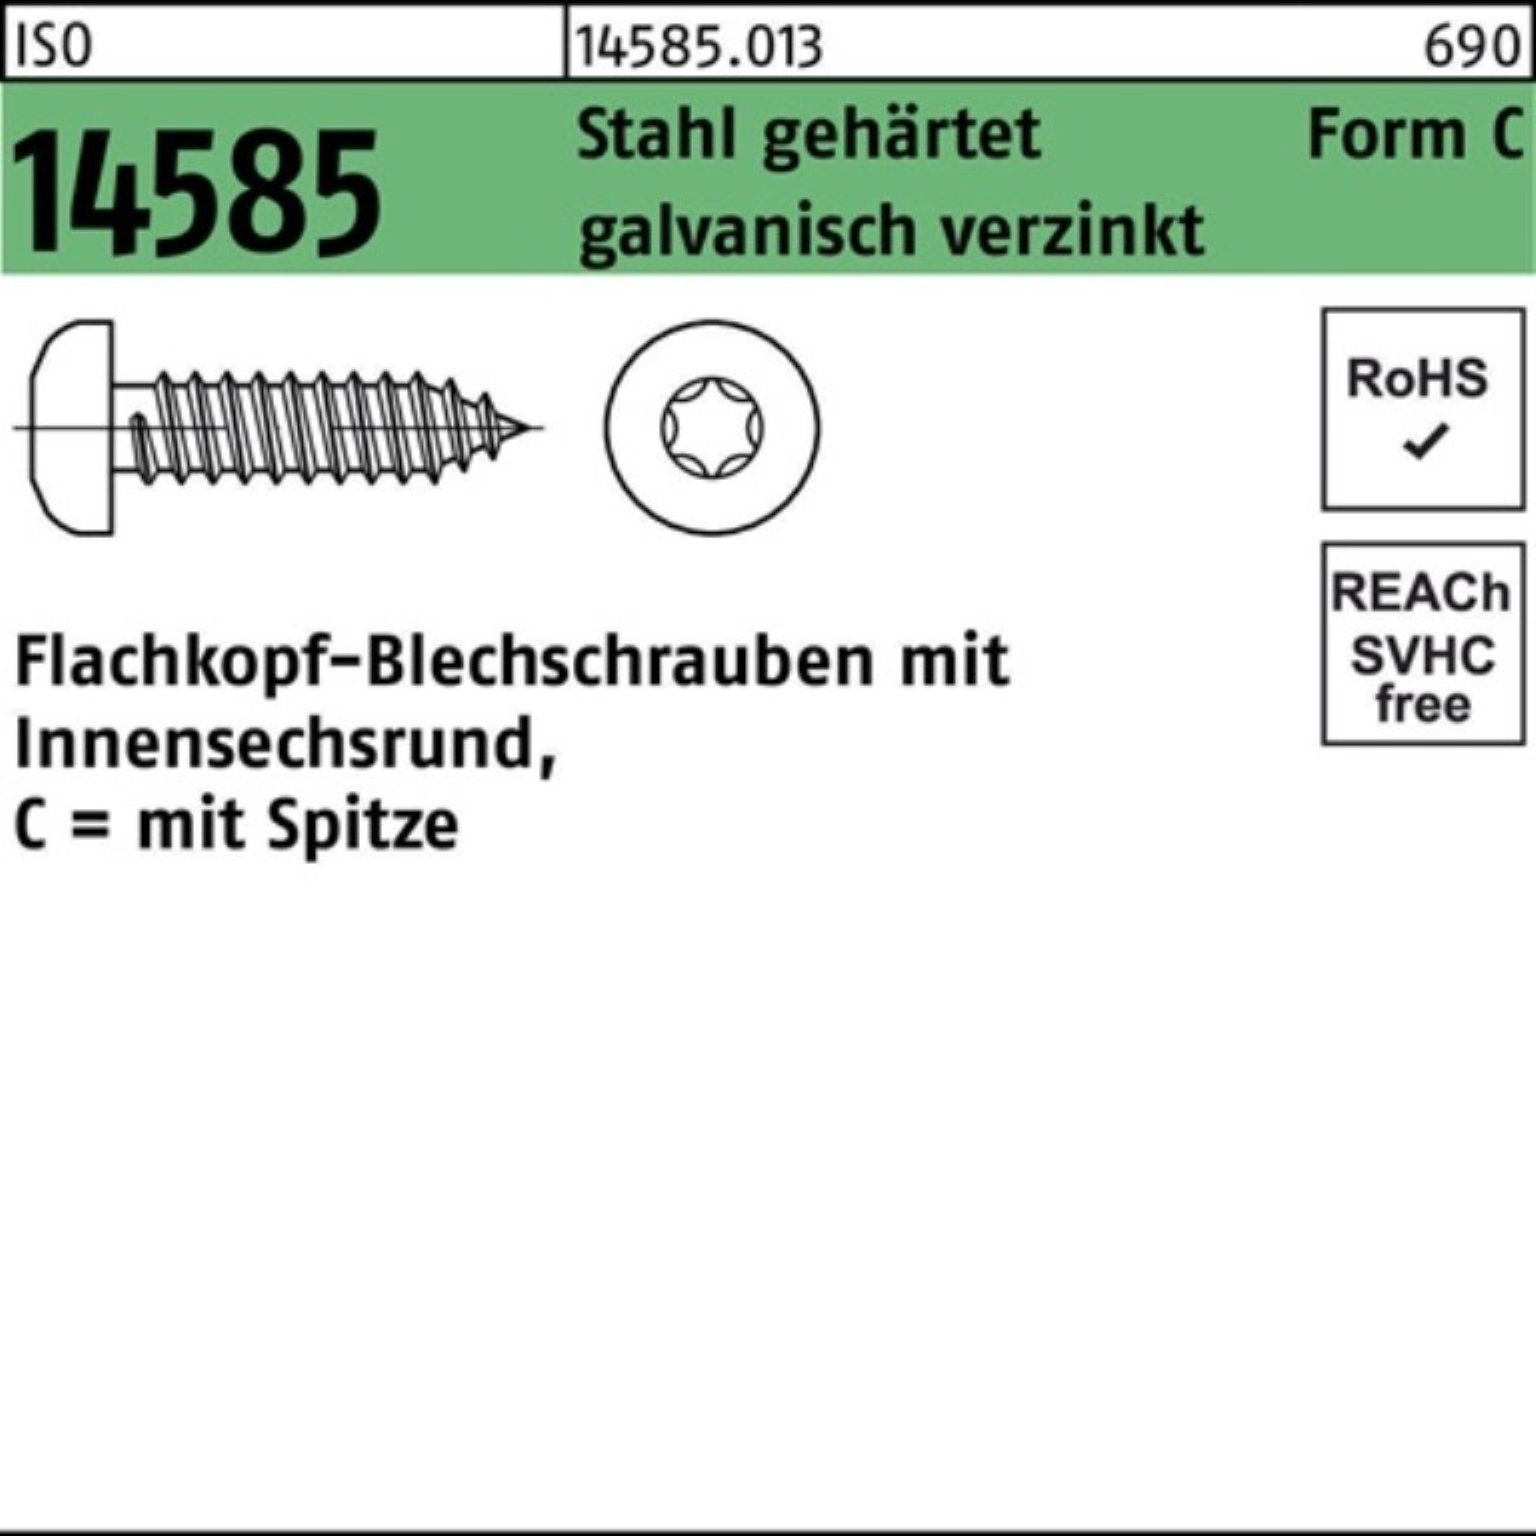 Reyher Blechschraube 2000er Pack -C-T10 Blechschraube ISR/Spitze 14585 Stahl geh 2,9x22 ISO